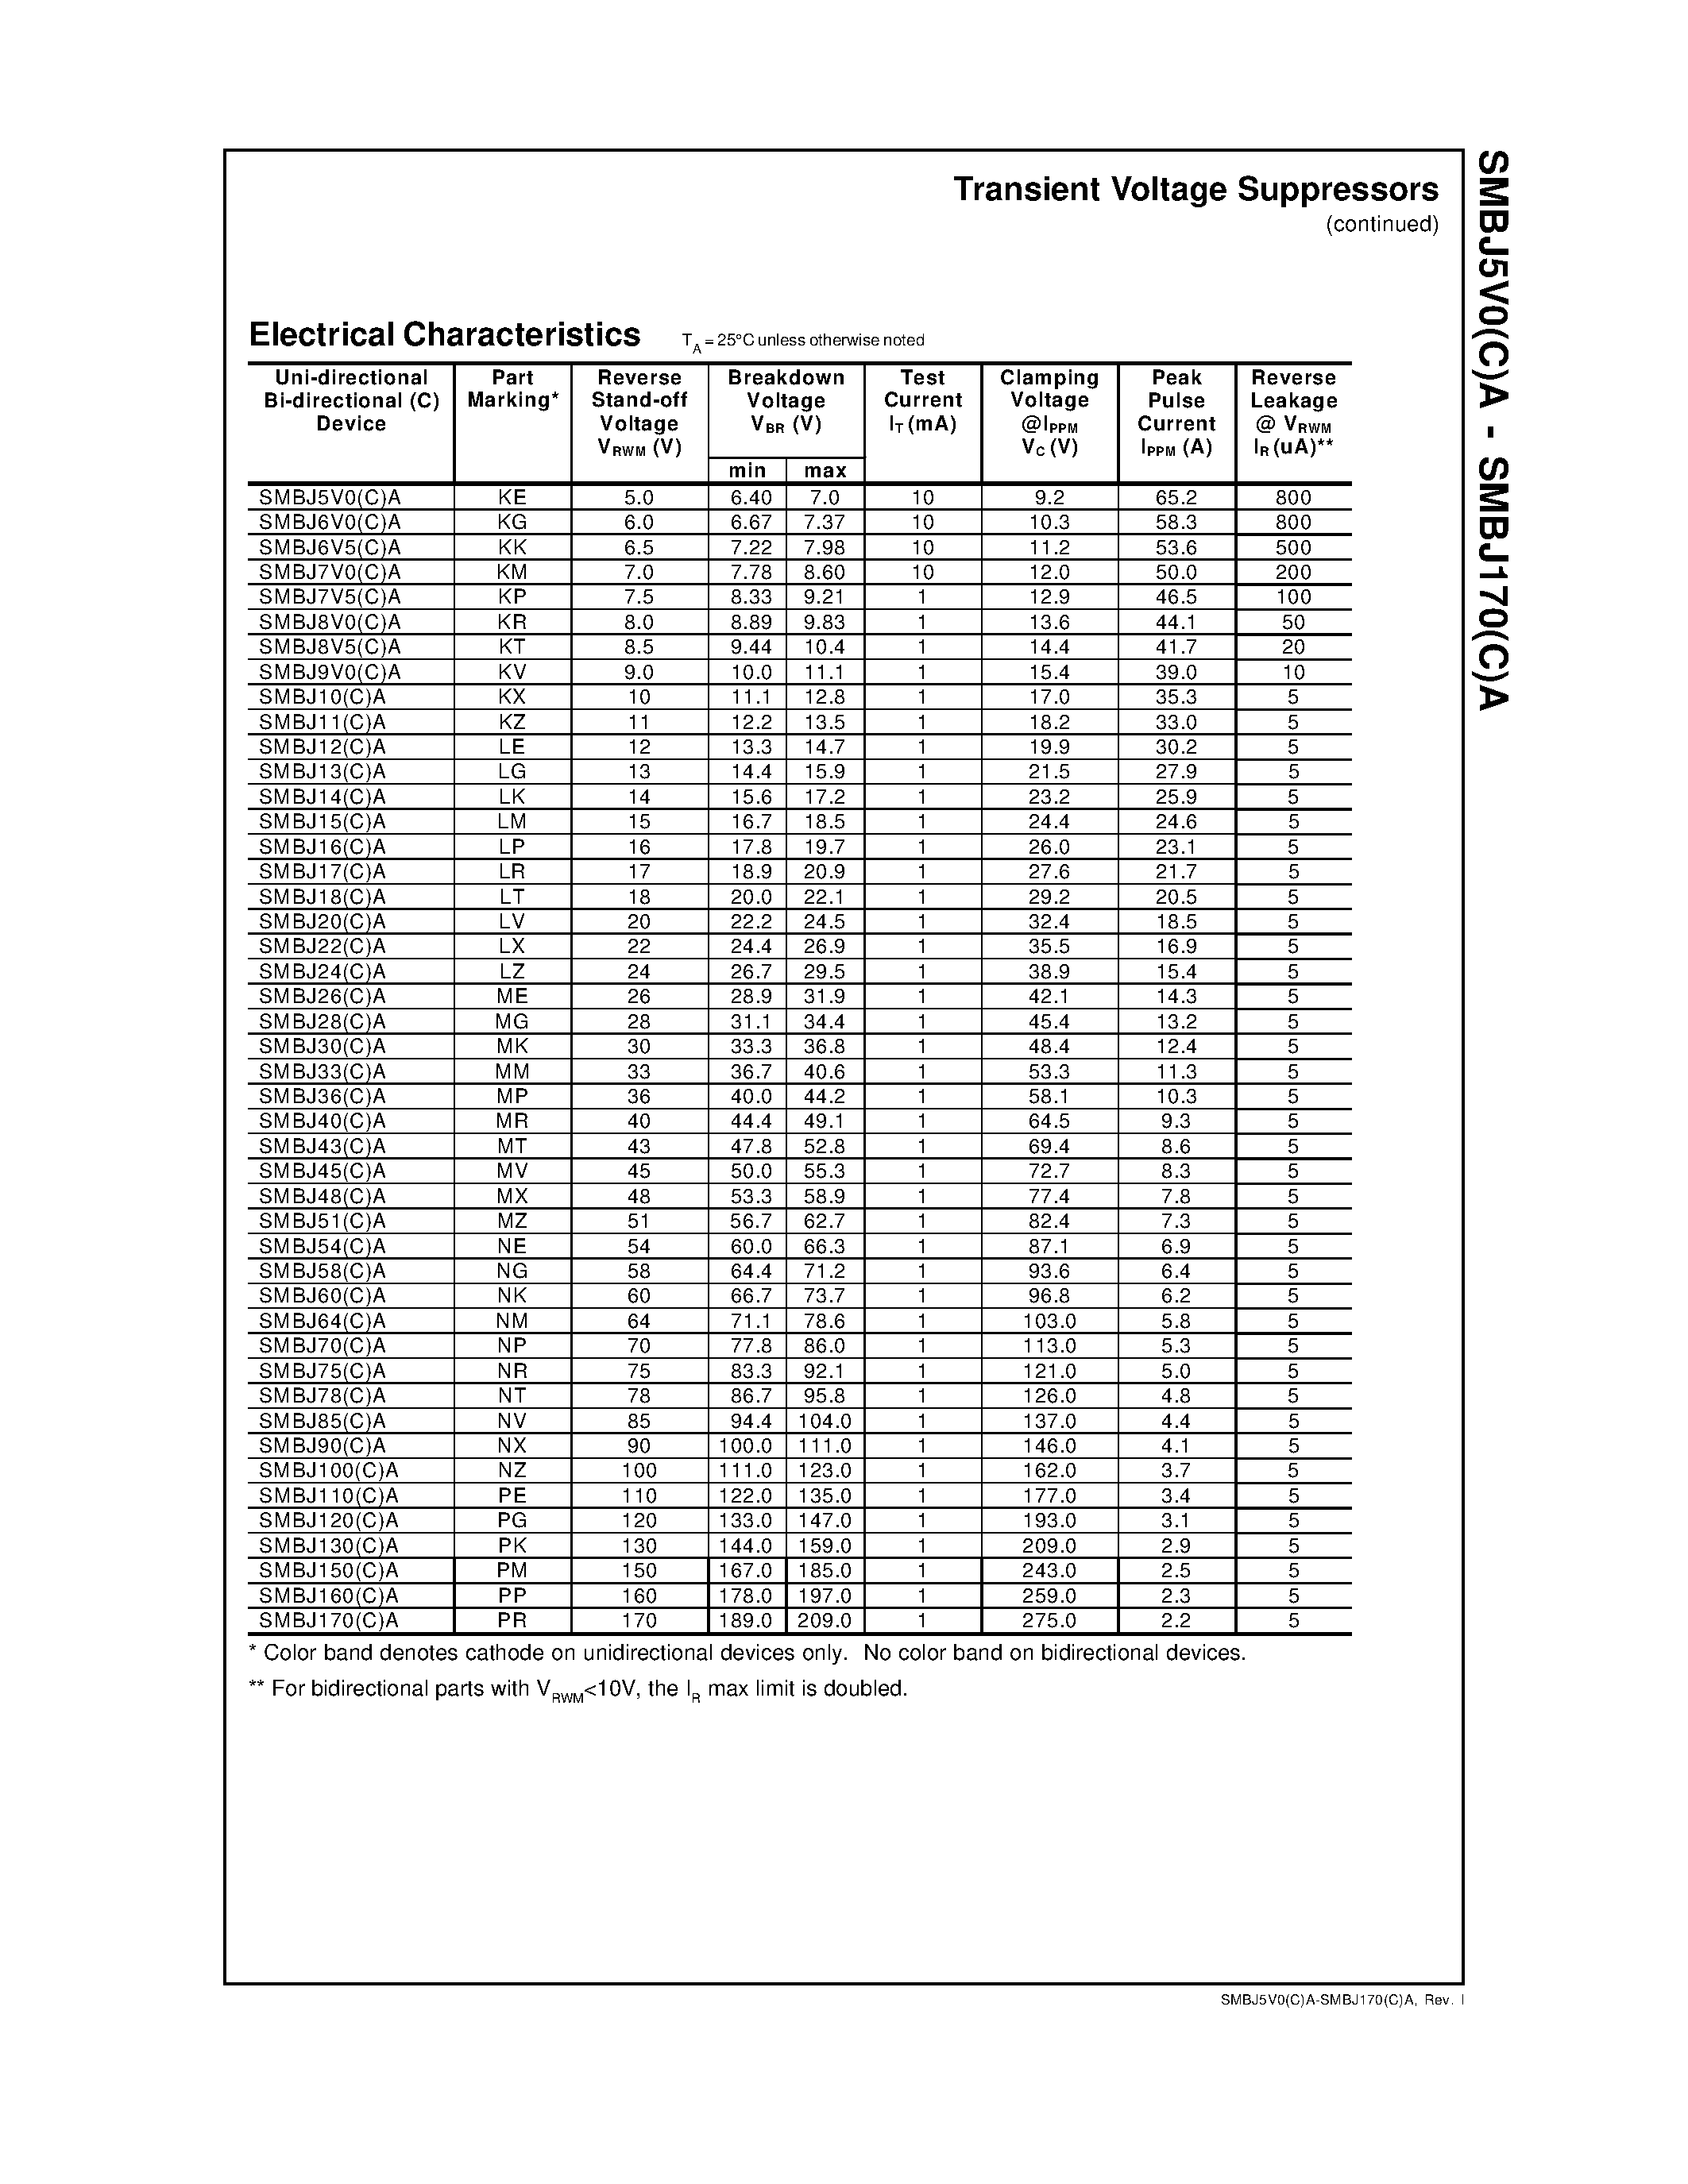 Datasheet SMBJ100A - Transient Voltage Suppressors SMBJ5V0(C)A - SMBJ170(C)A page 2